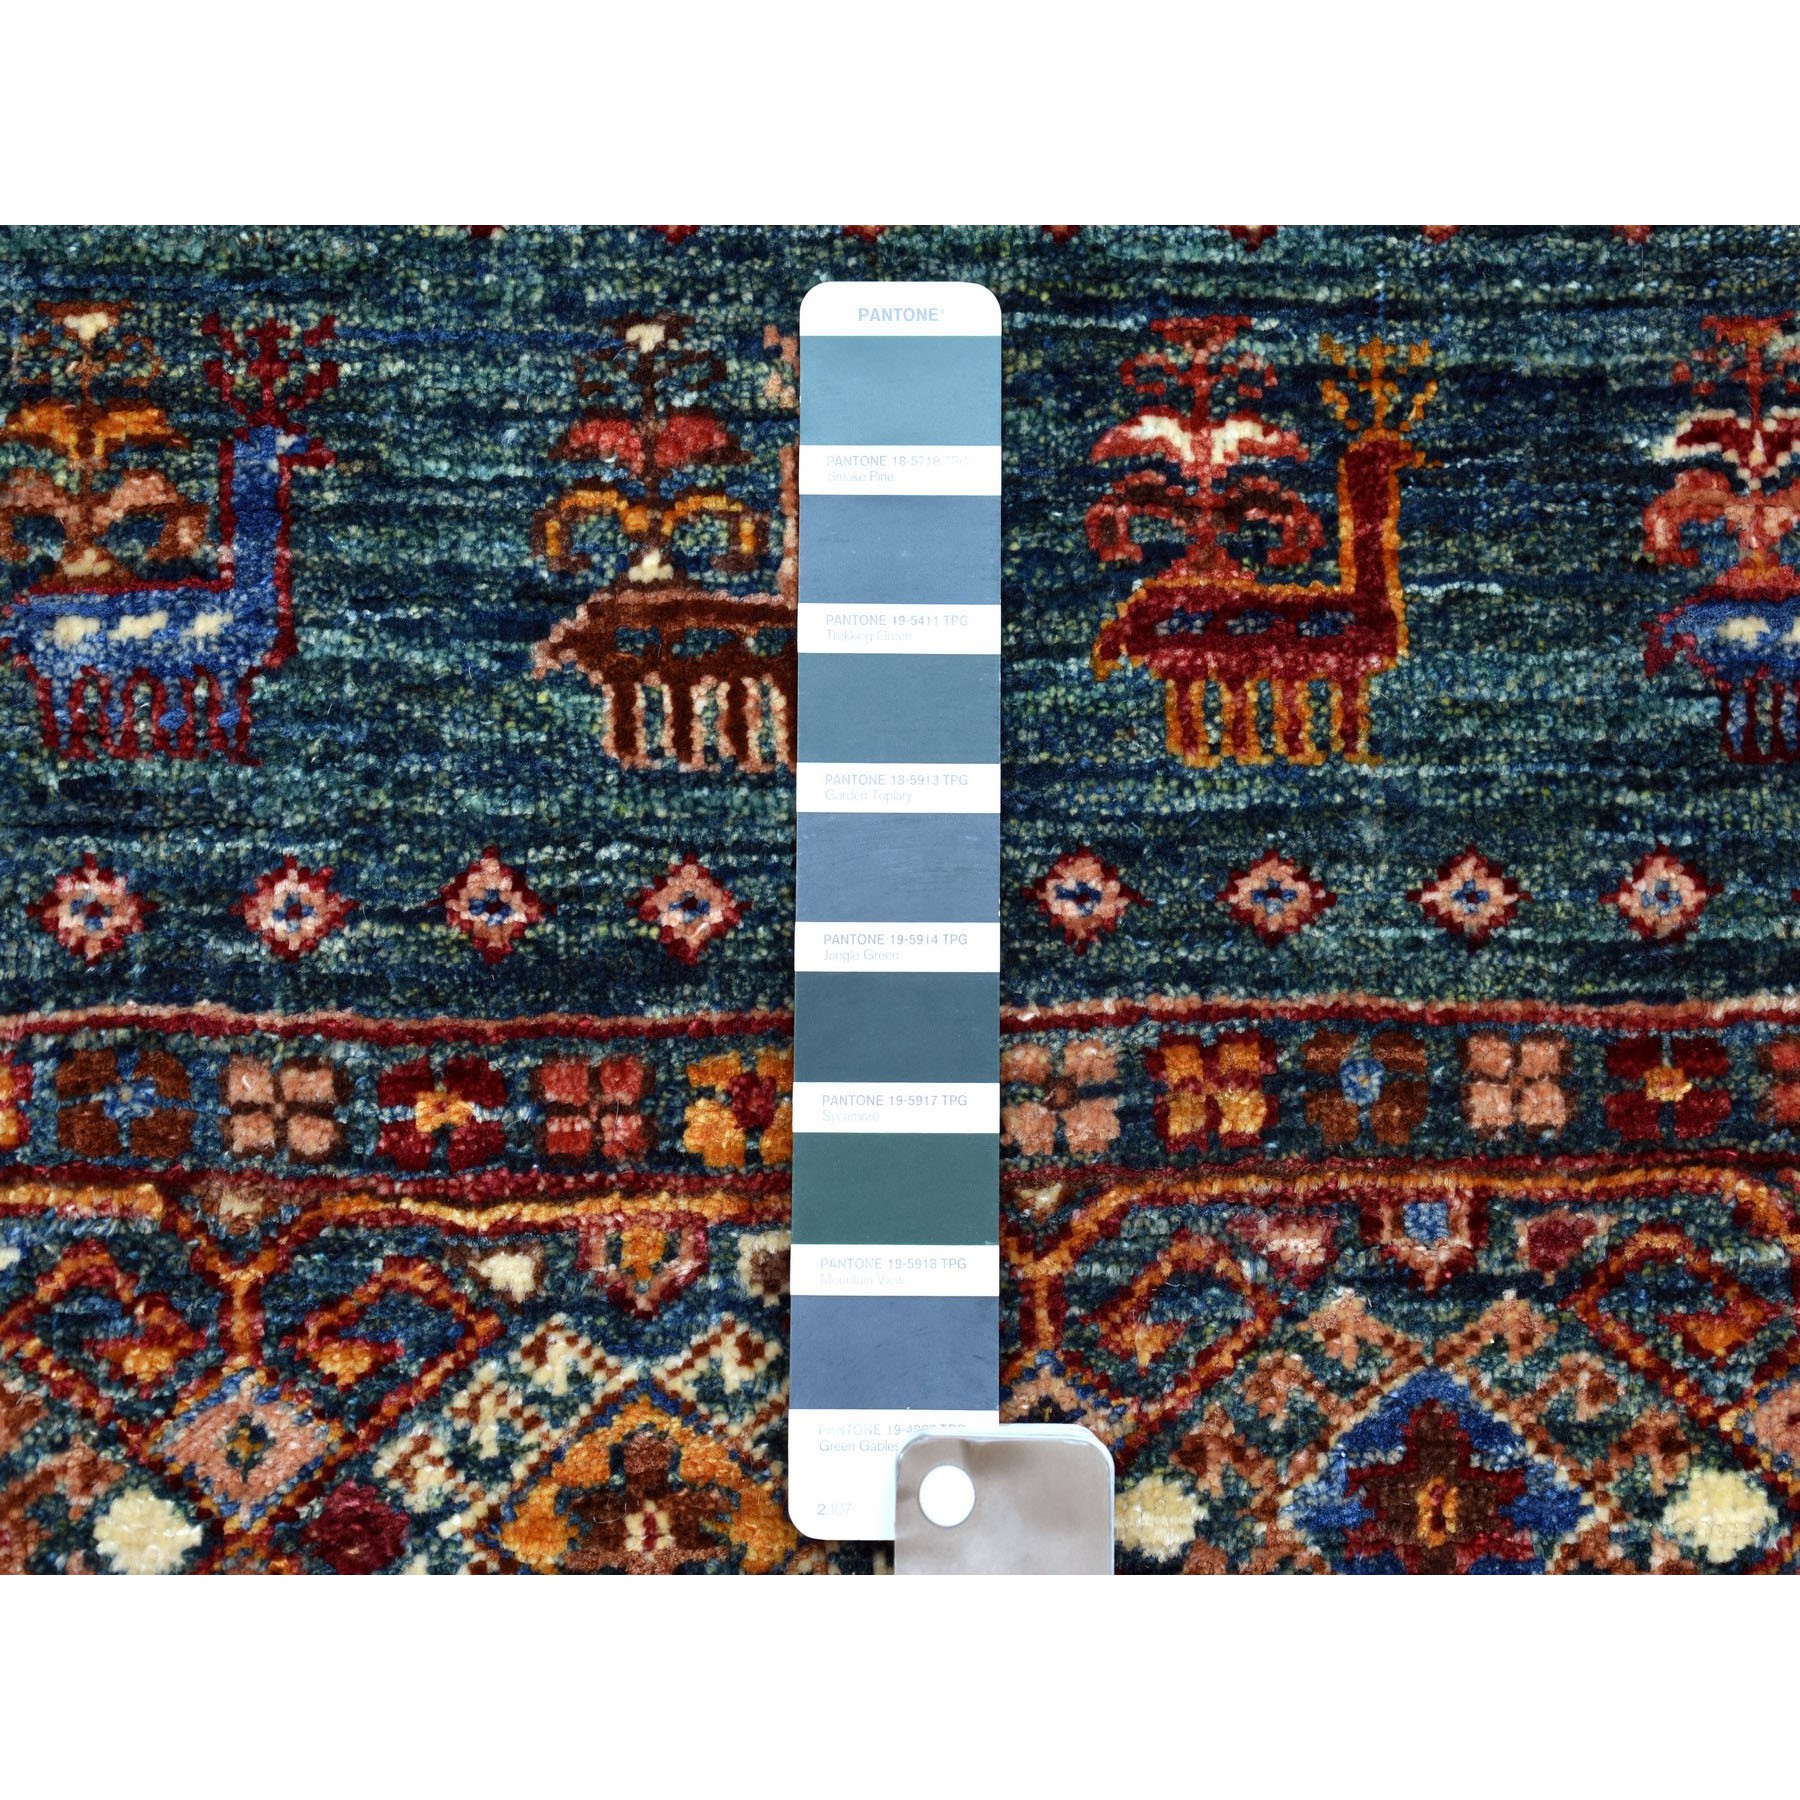 2-7 x6-1  Green Khorjin Design Runner Super Kazak Pictorial Pure Wool Hand Knotted Oriental Rug 